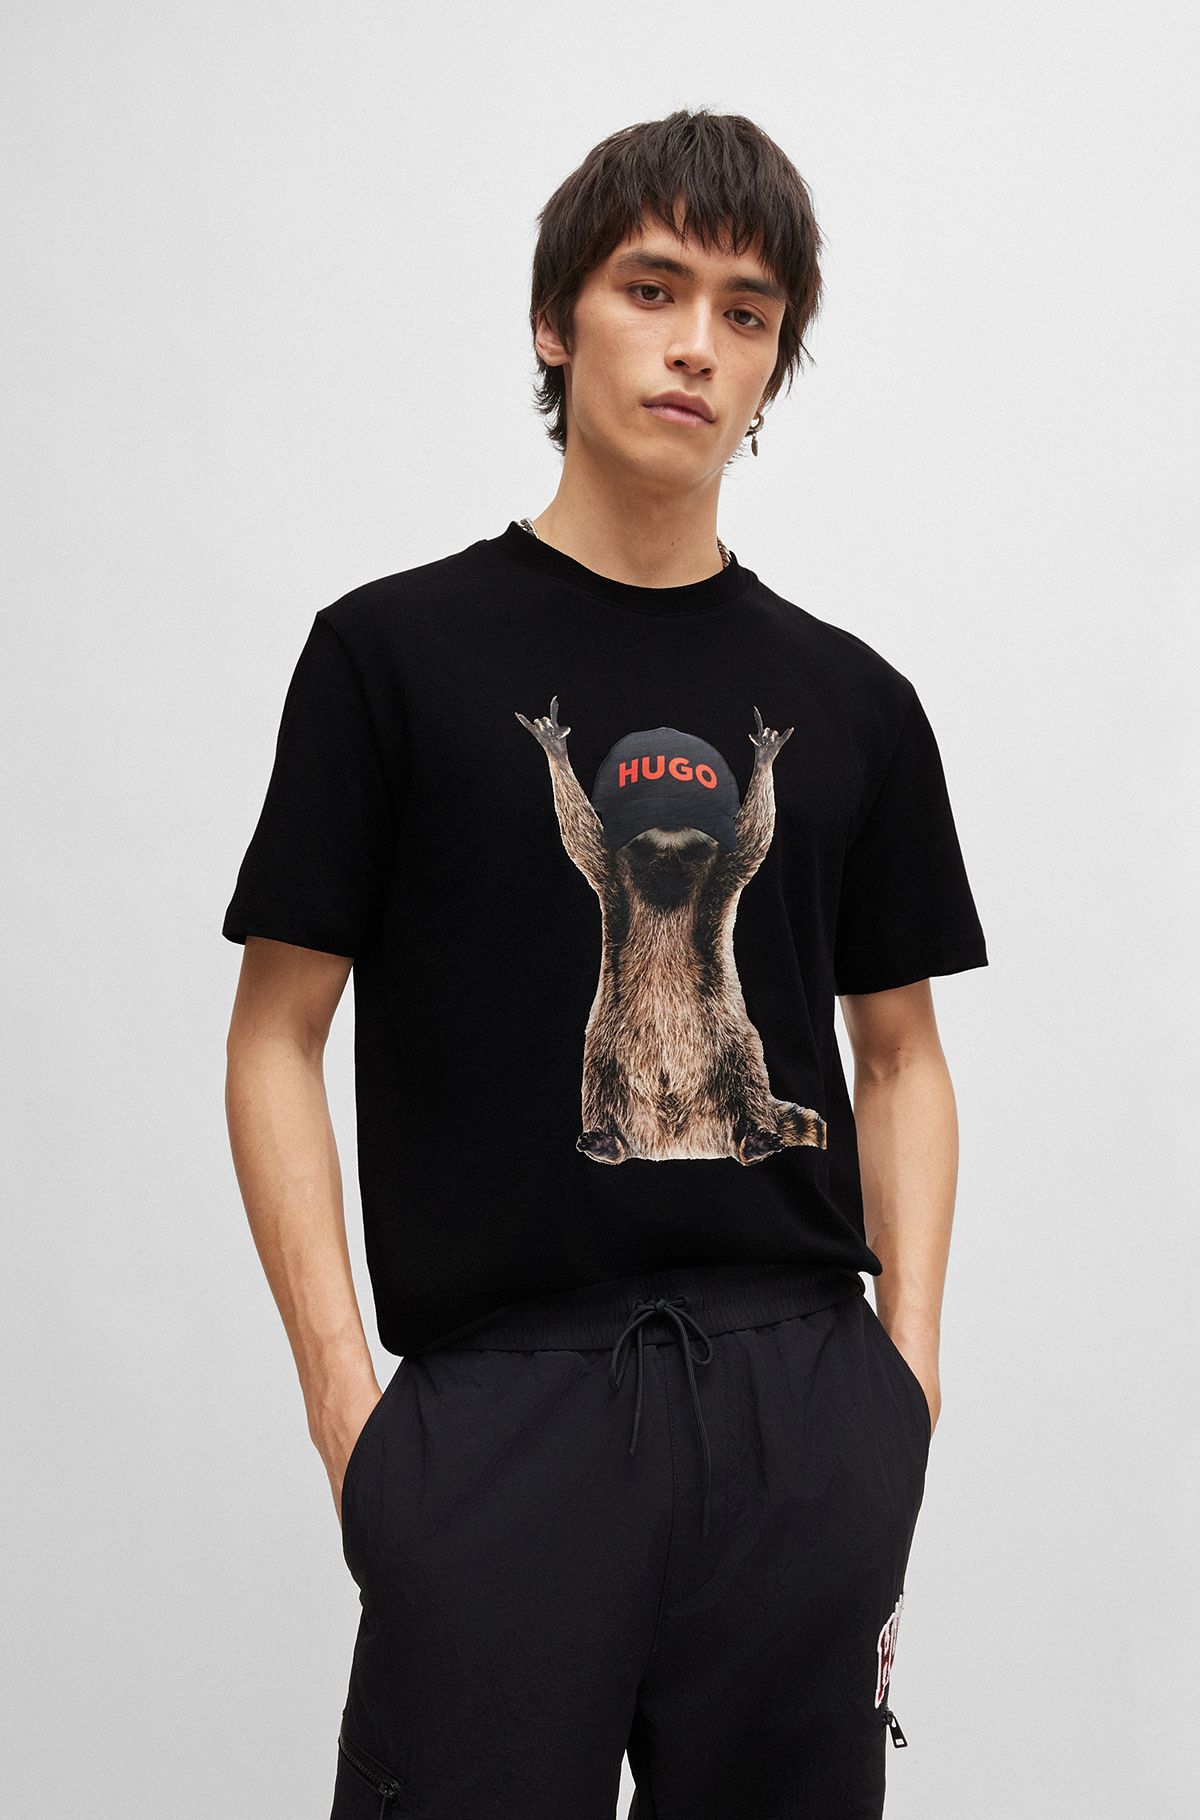 HUGO BOSS T-Shirts – Elaborate designs